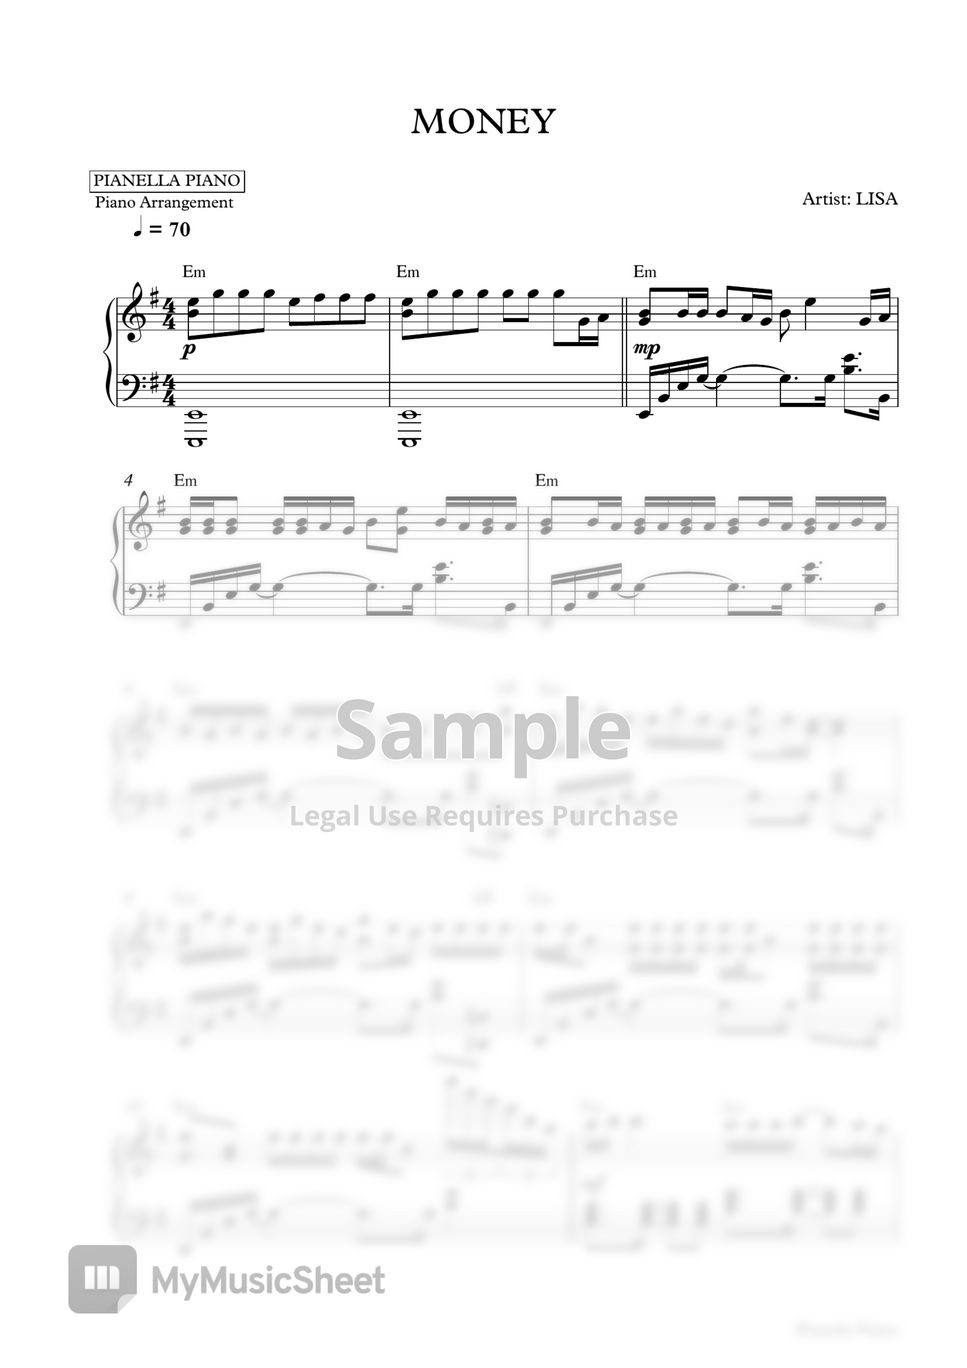 LISA (BLACKPINK) - MONEY (Piano Sheet) by Pianella Piano